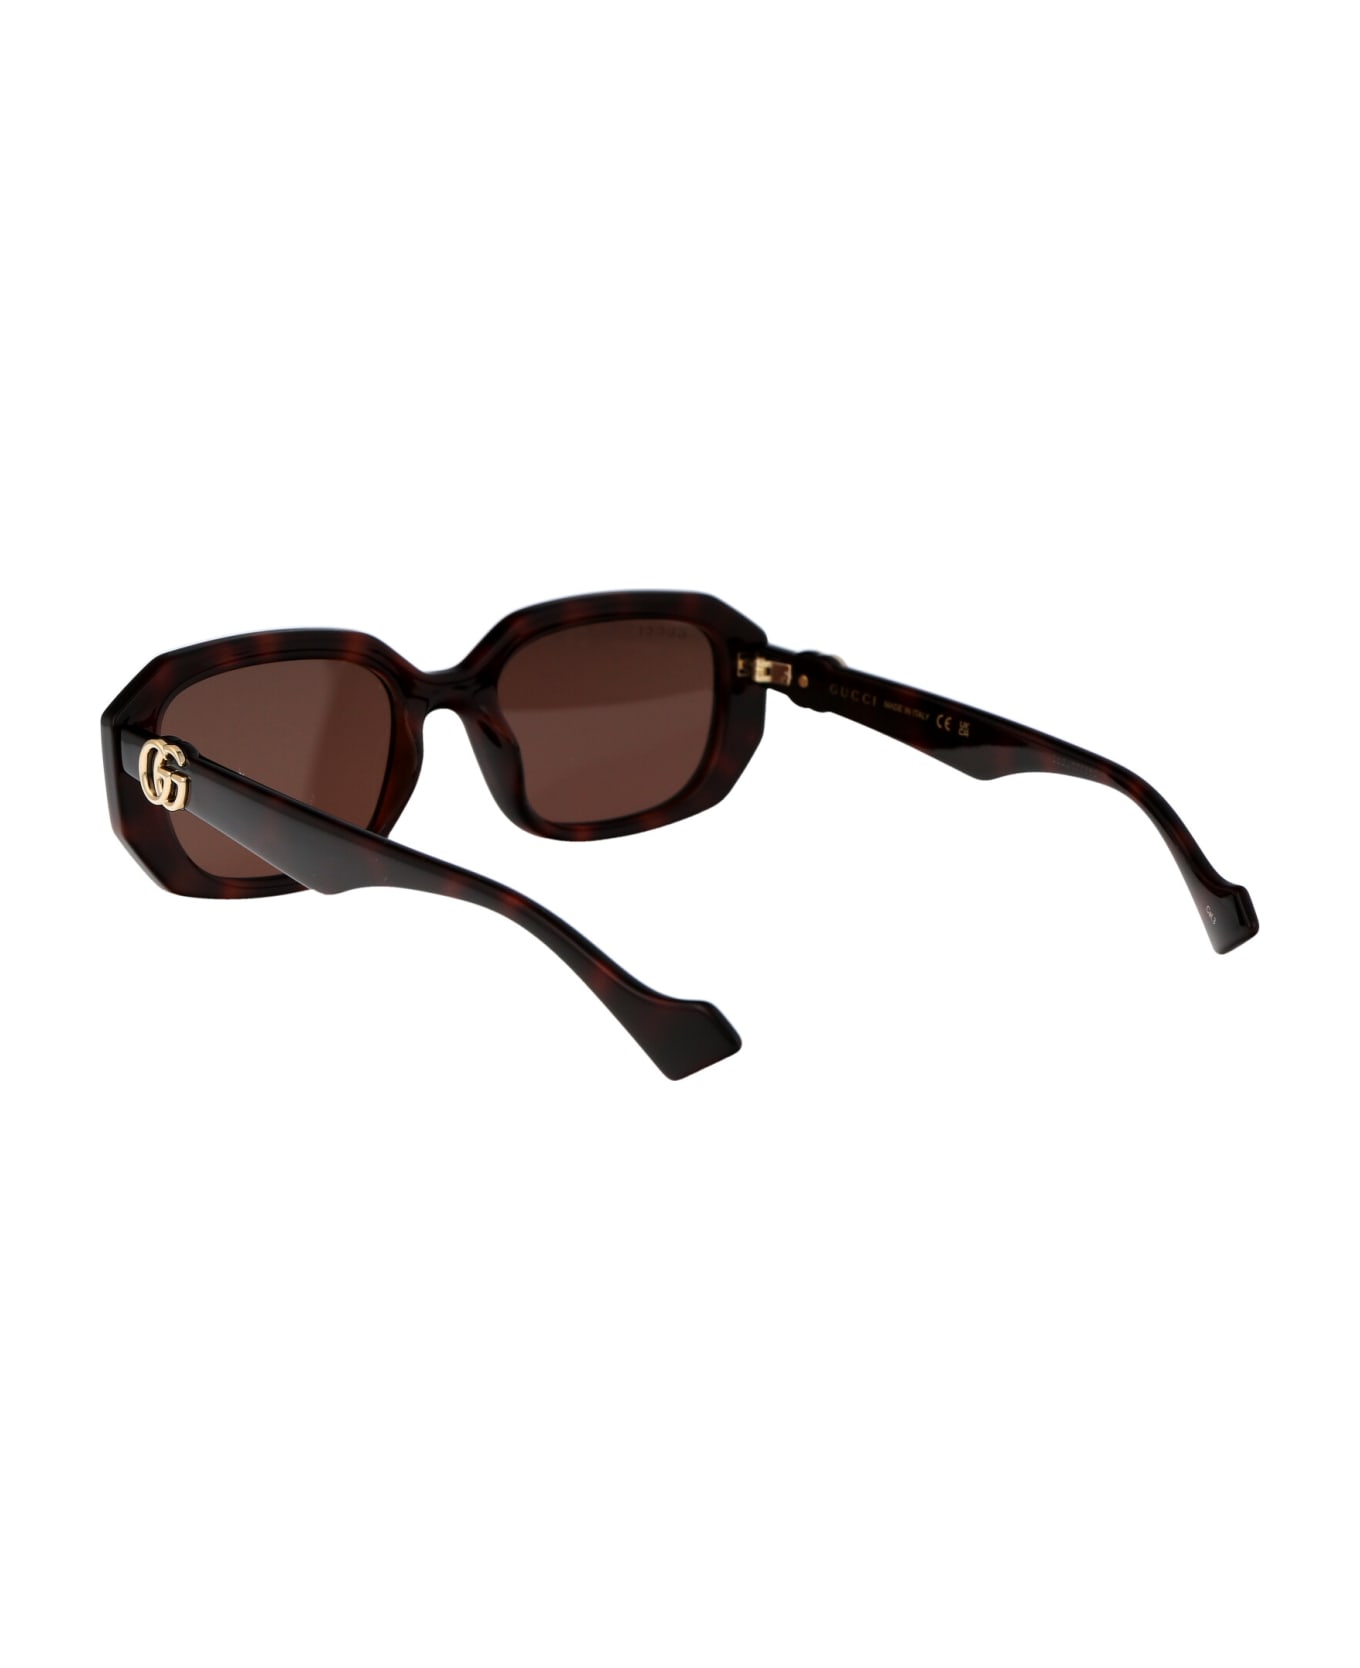 Gucci Eyewear Gg1535s Sunglasses - 002 HAVANA HAVANA BROWN サングラス